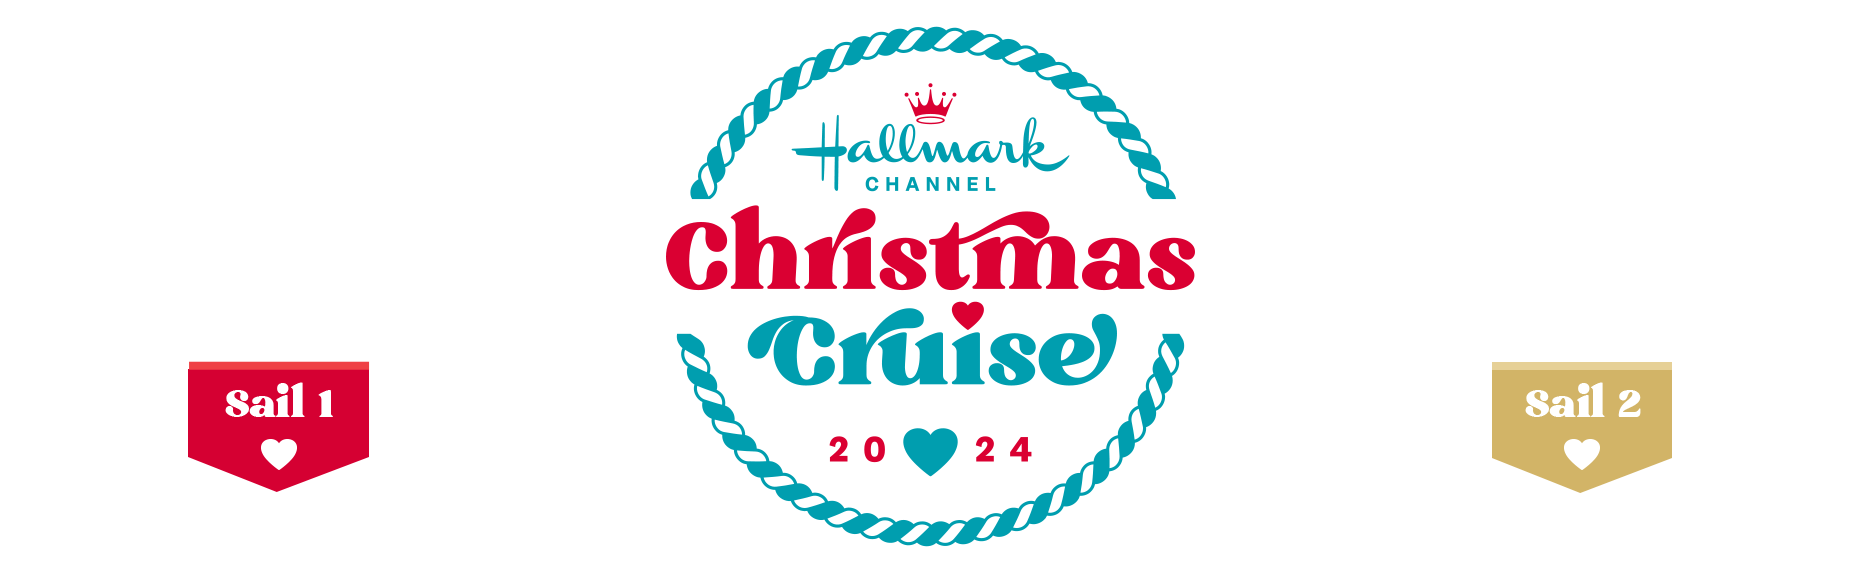 Hallmark Channel Christmas Cruise